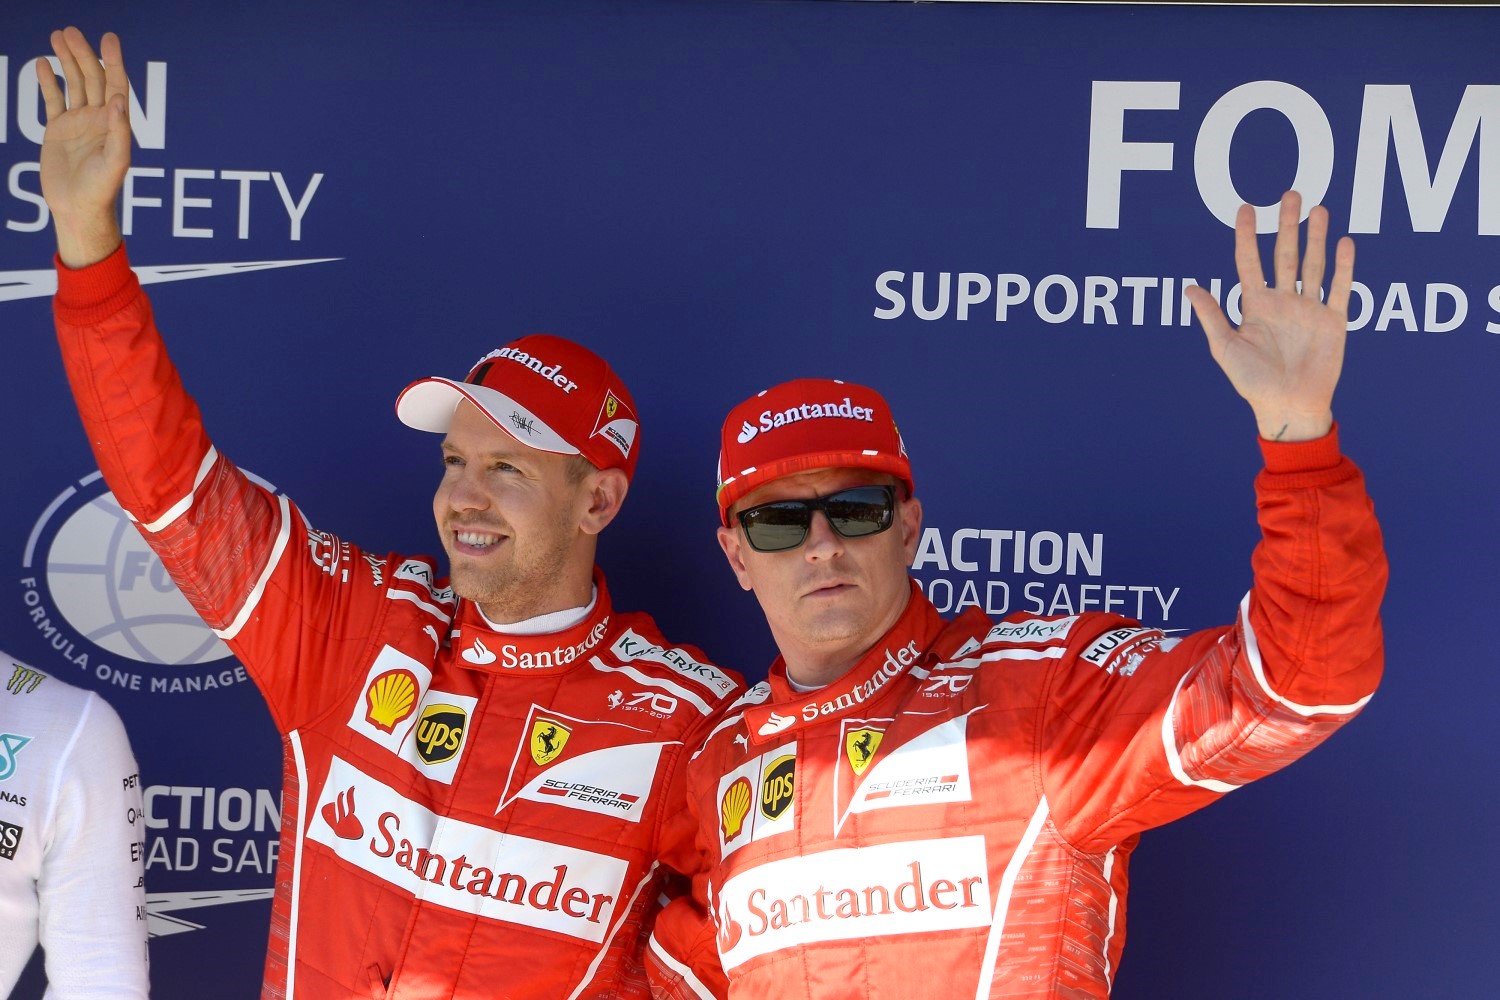 Vettel and Raikkonen to start 1-2 in Hungary